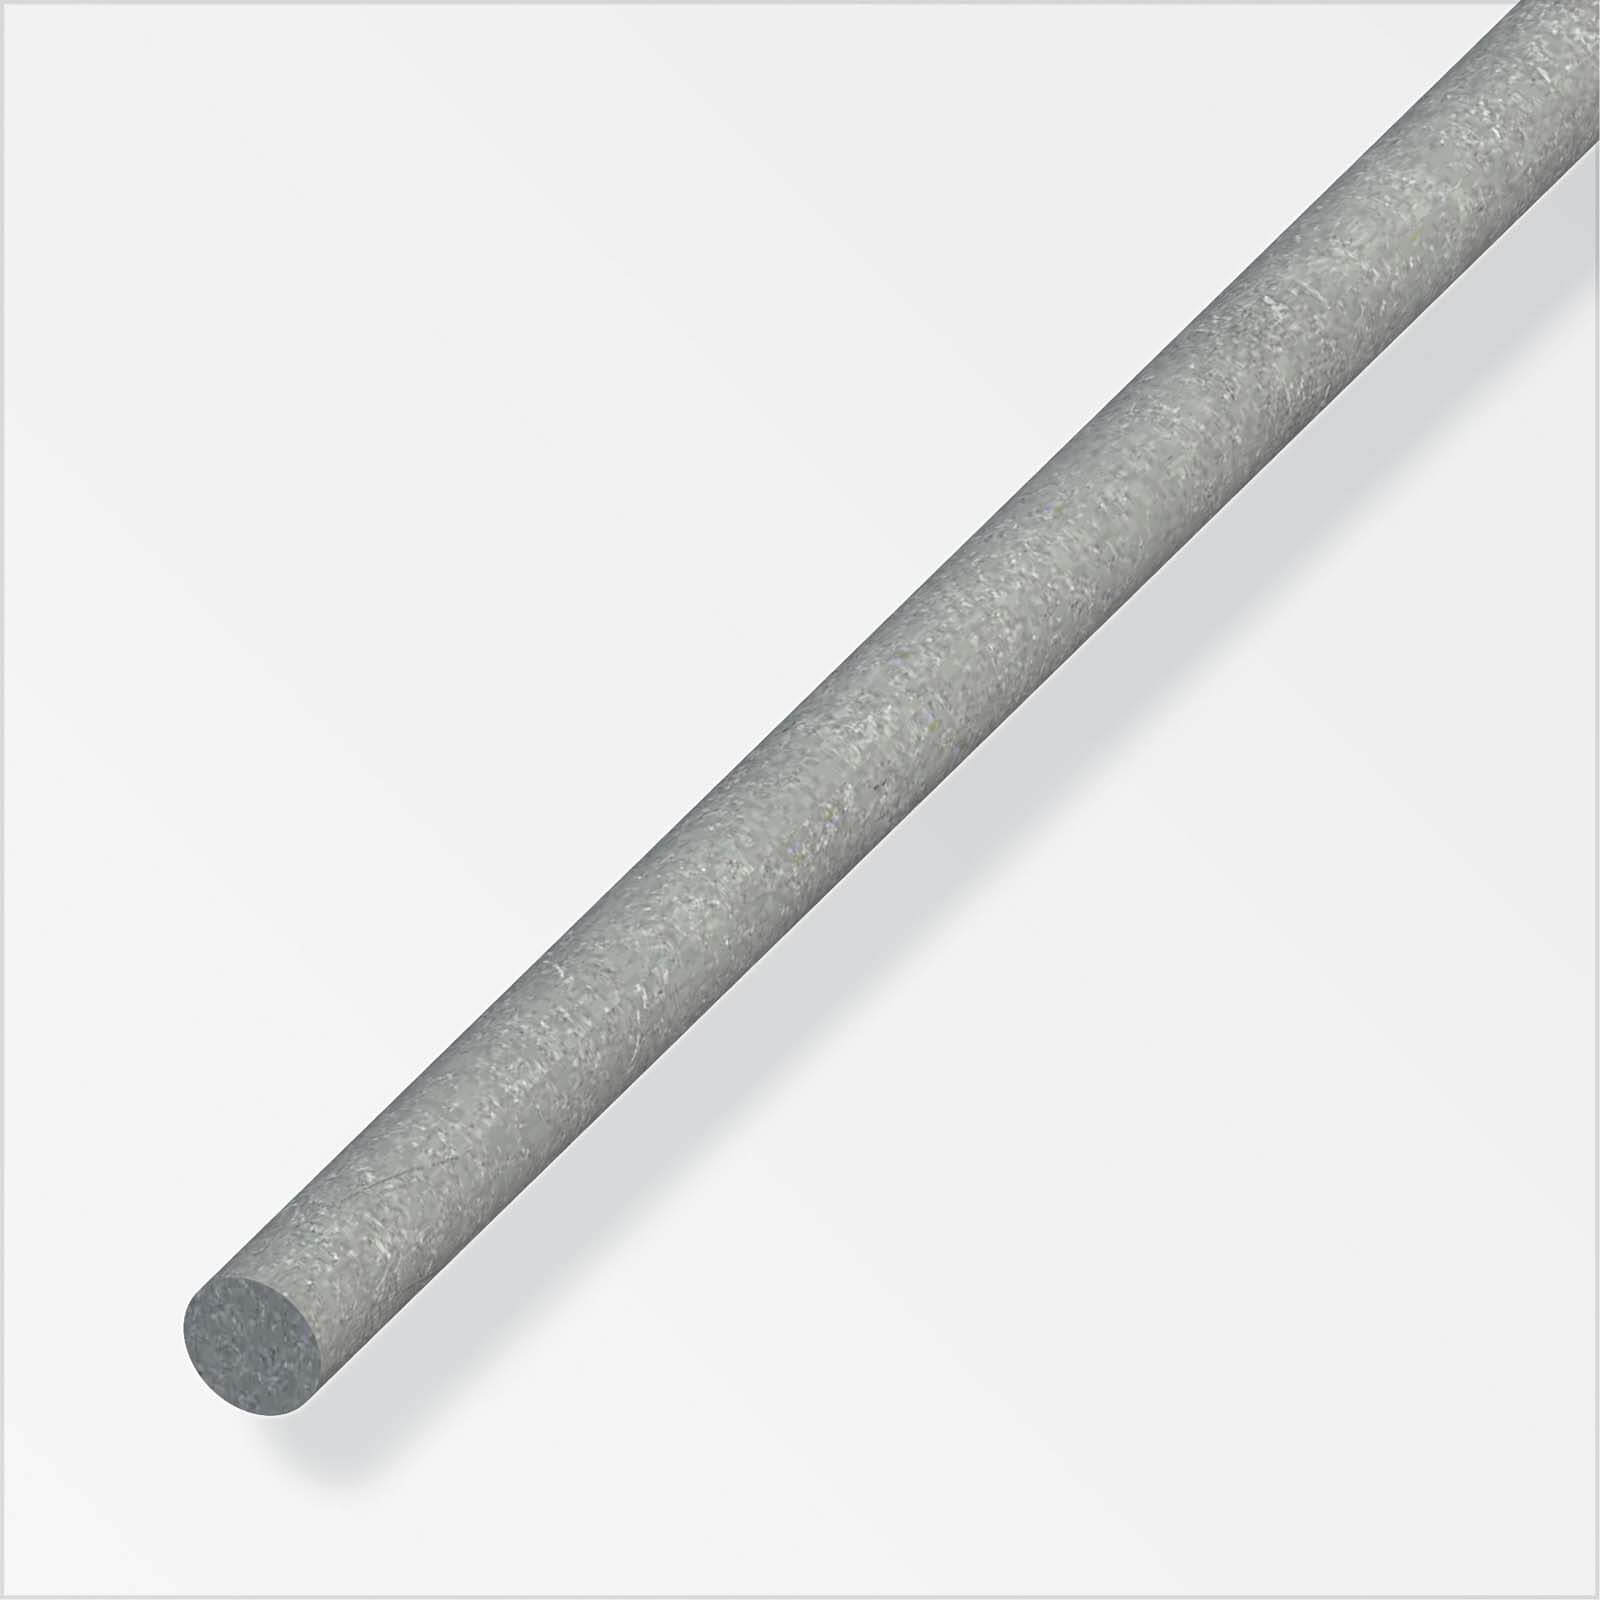 Drawn Steel Round Bar - 1m x 8 x 8mm